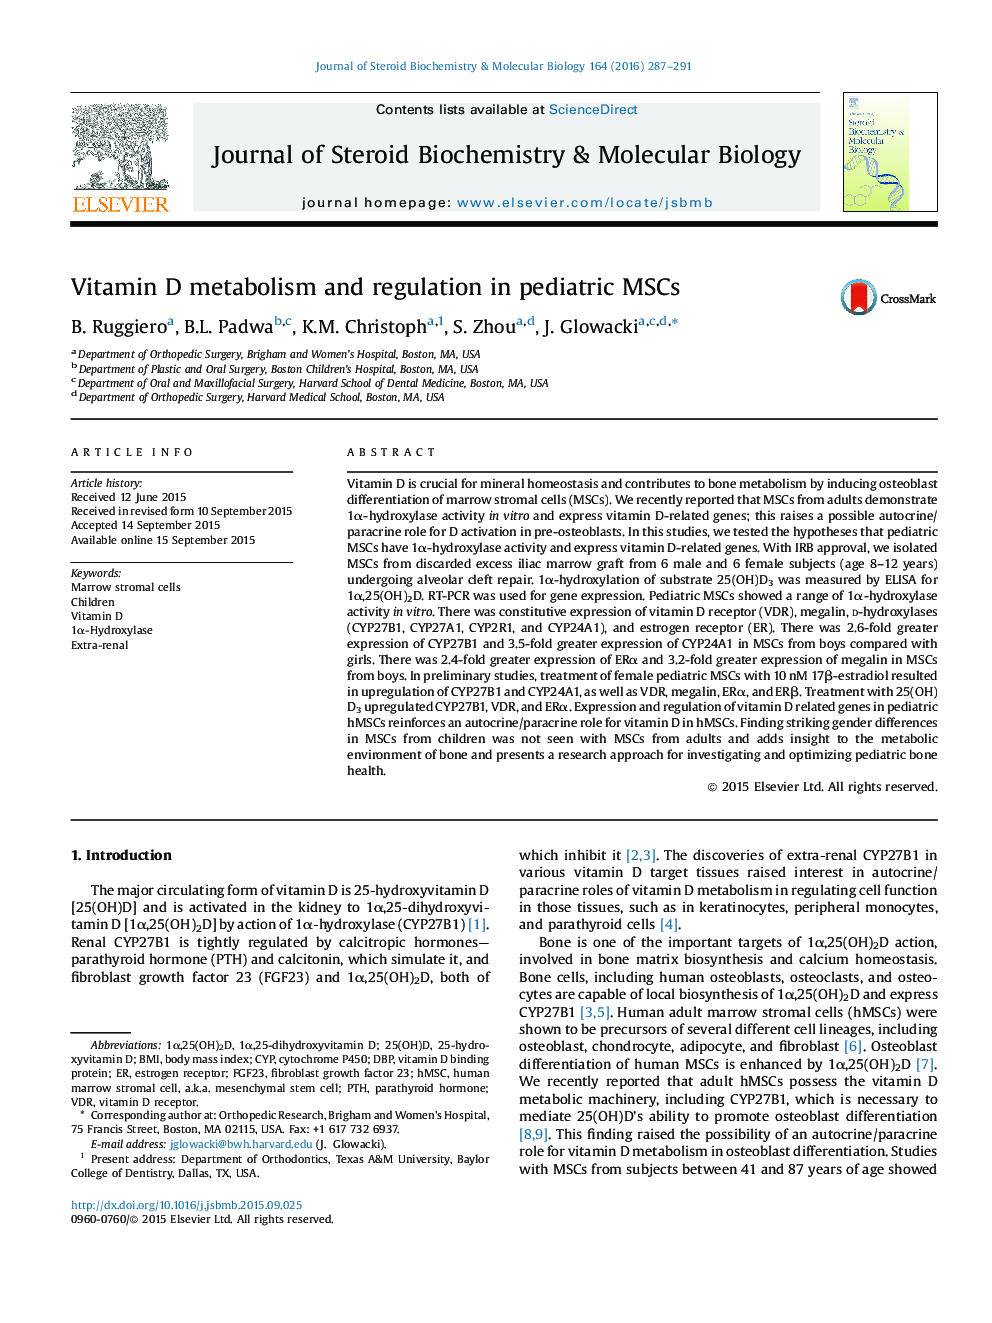 Vitamin D metabolism and regulation in pediatric MSCs